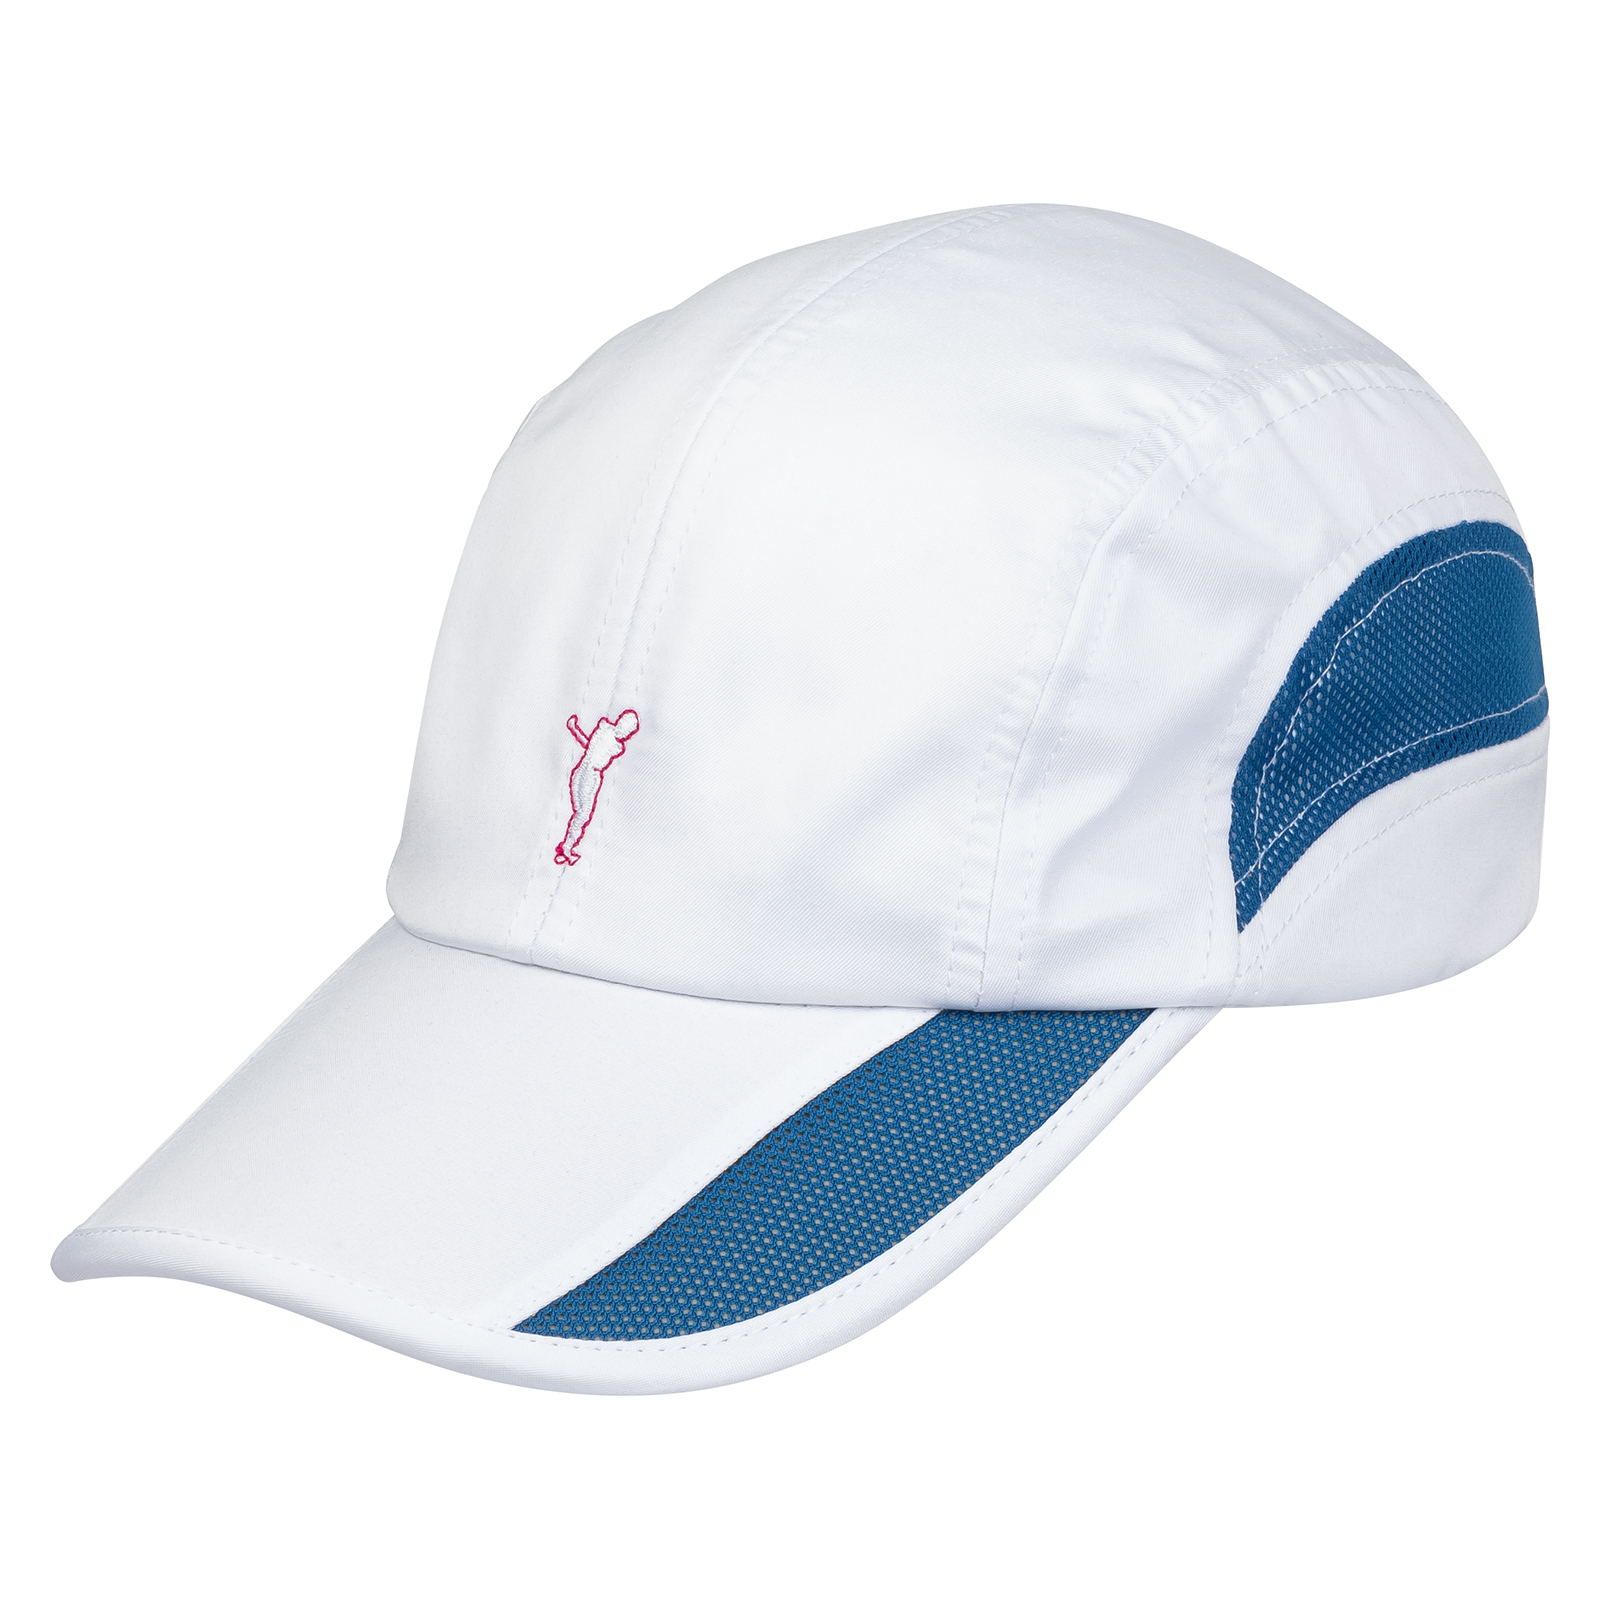 Comfortable and durable men's cap 